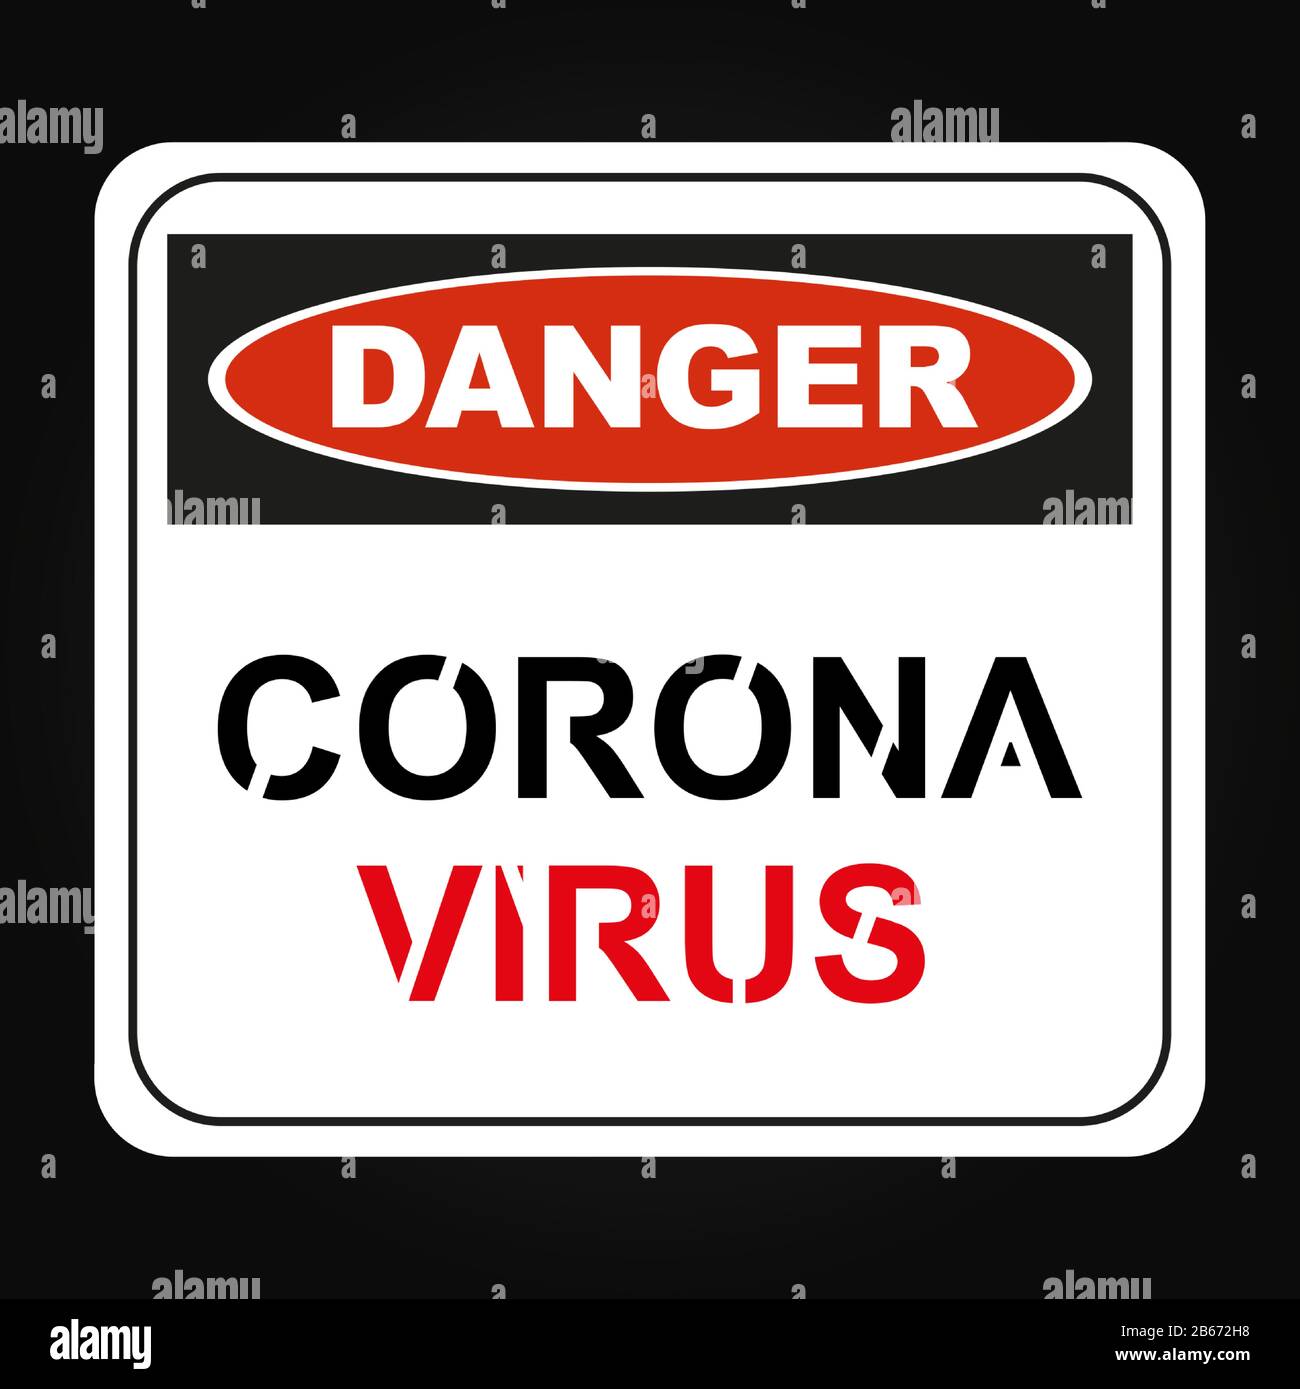 Corona Virus, (2019-nCoV). Danger text sign and corona virus text below Stock Vector